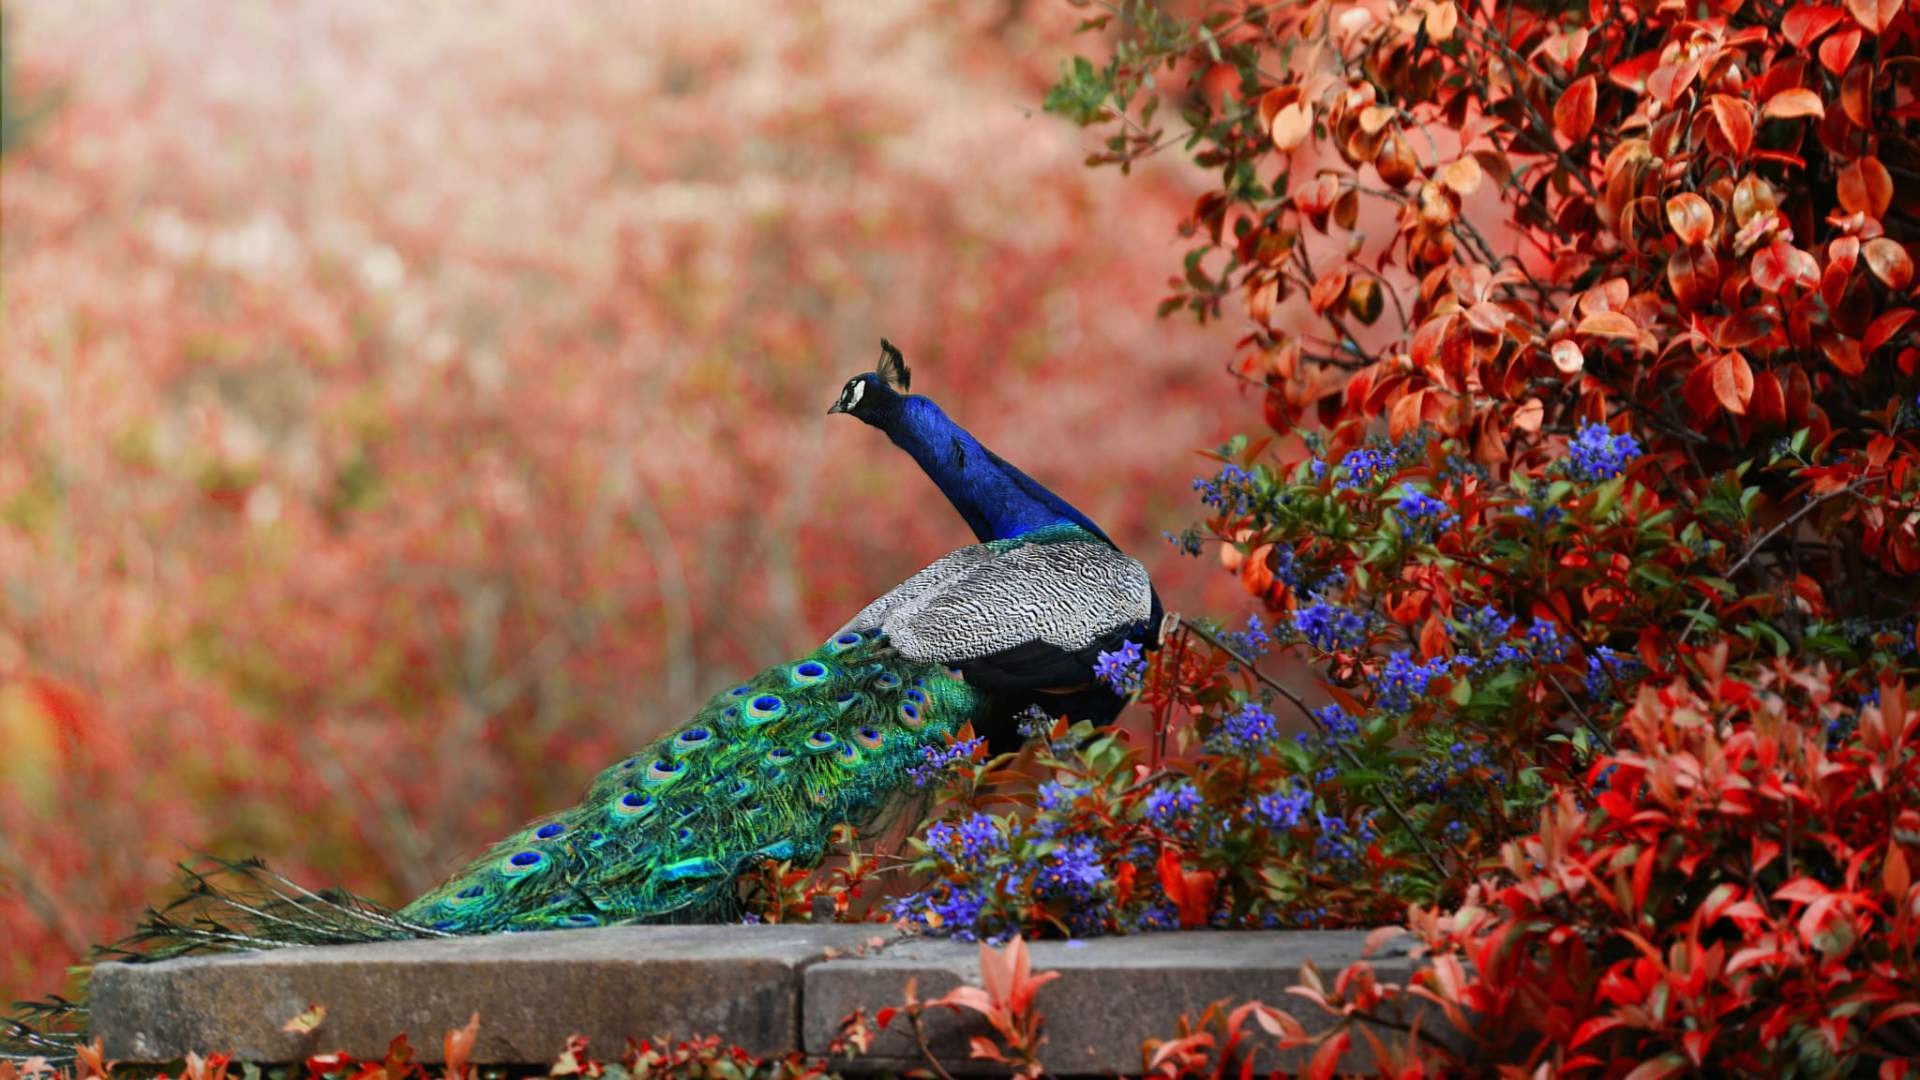 peacock hd wallpaper fullscreen fresh images,peafowl,bird,leaf,tree